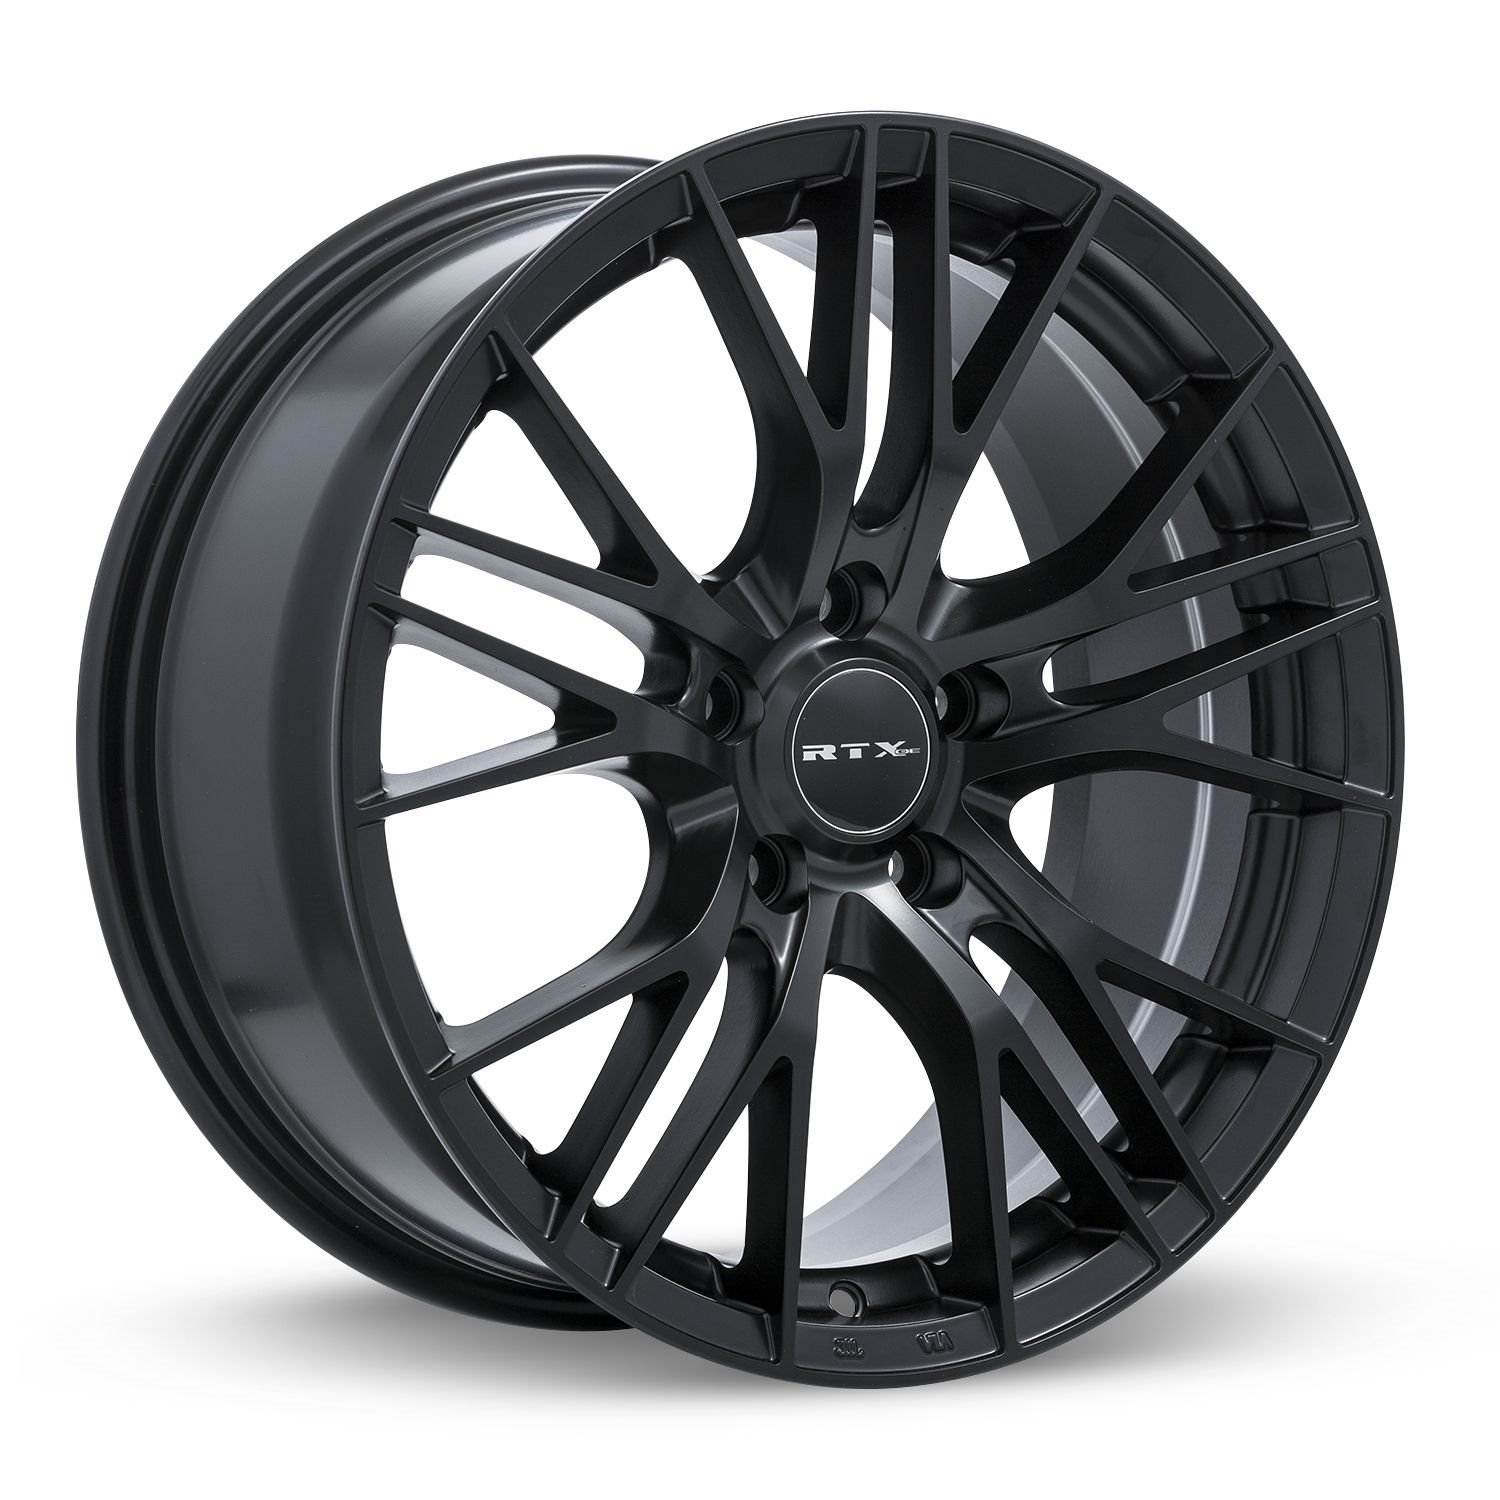 082300 RTX-Series Vertex Wheel [Size: 16" x 7"] Satin Black Finish